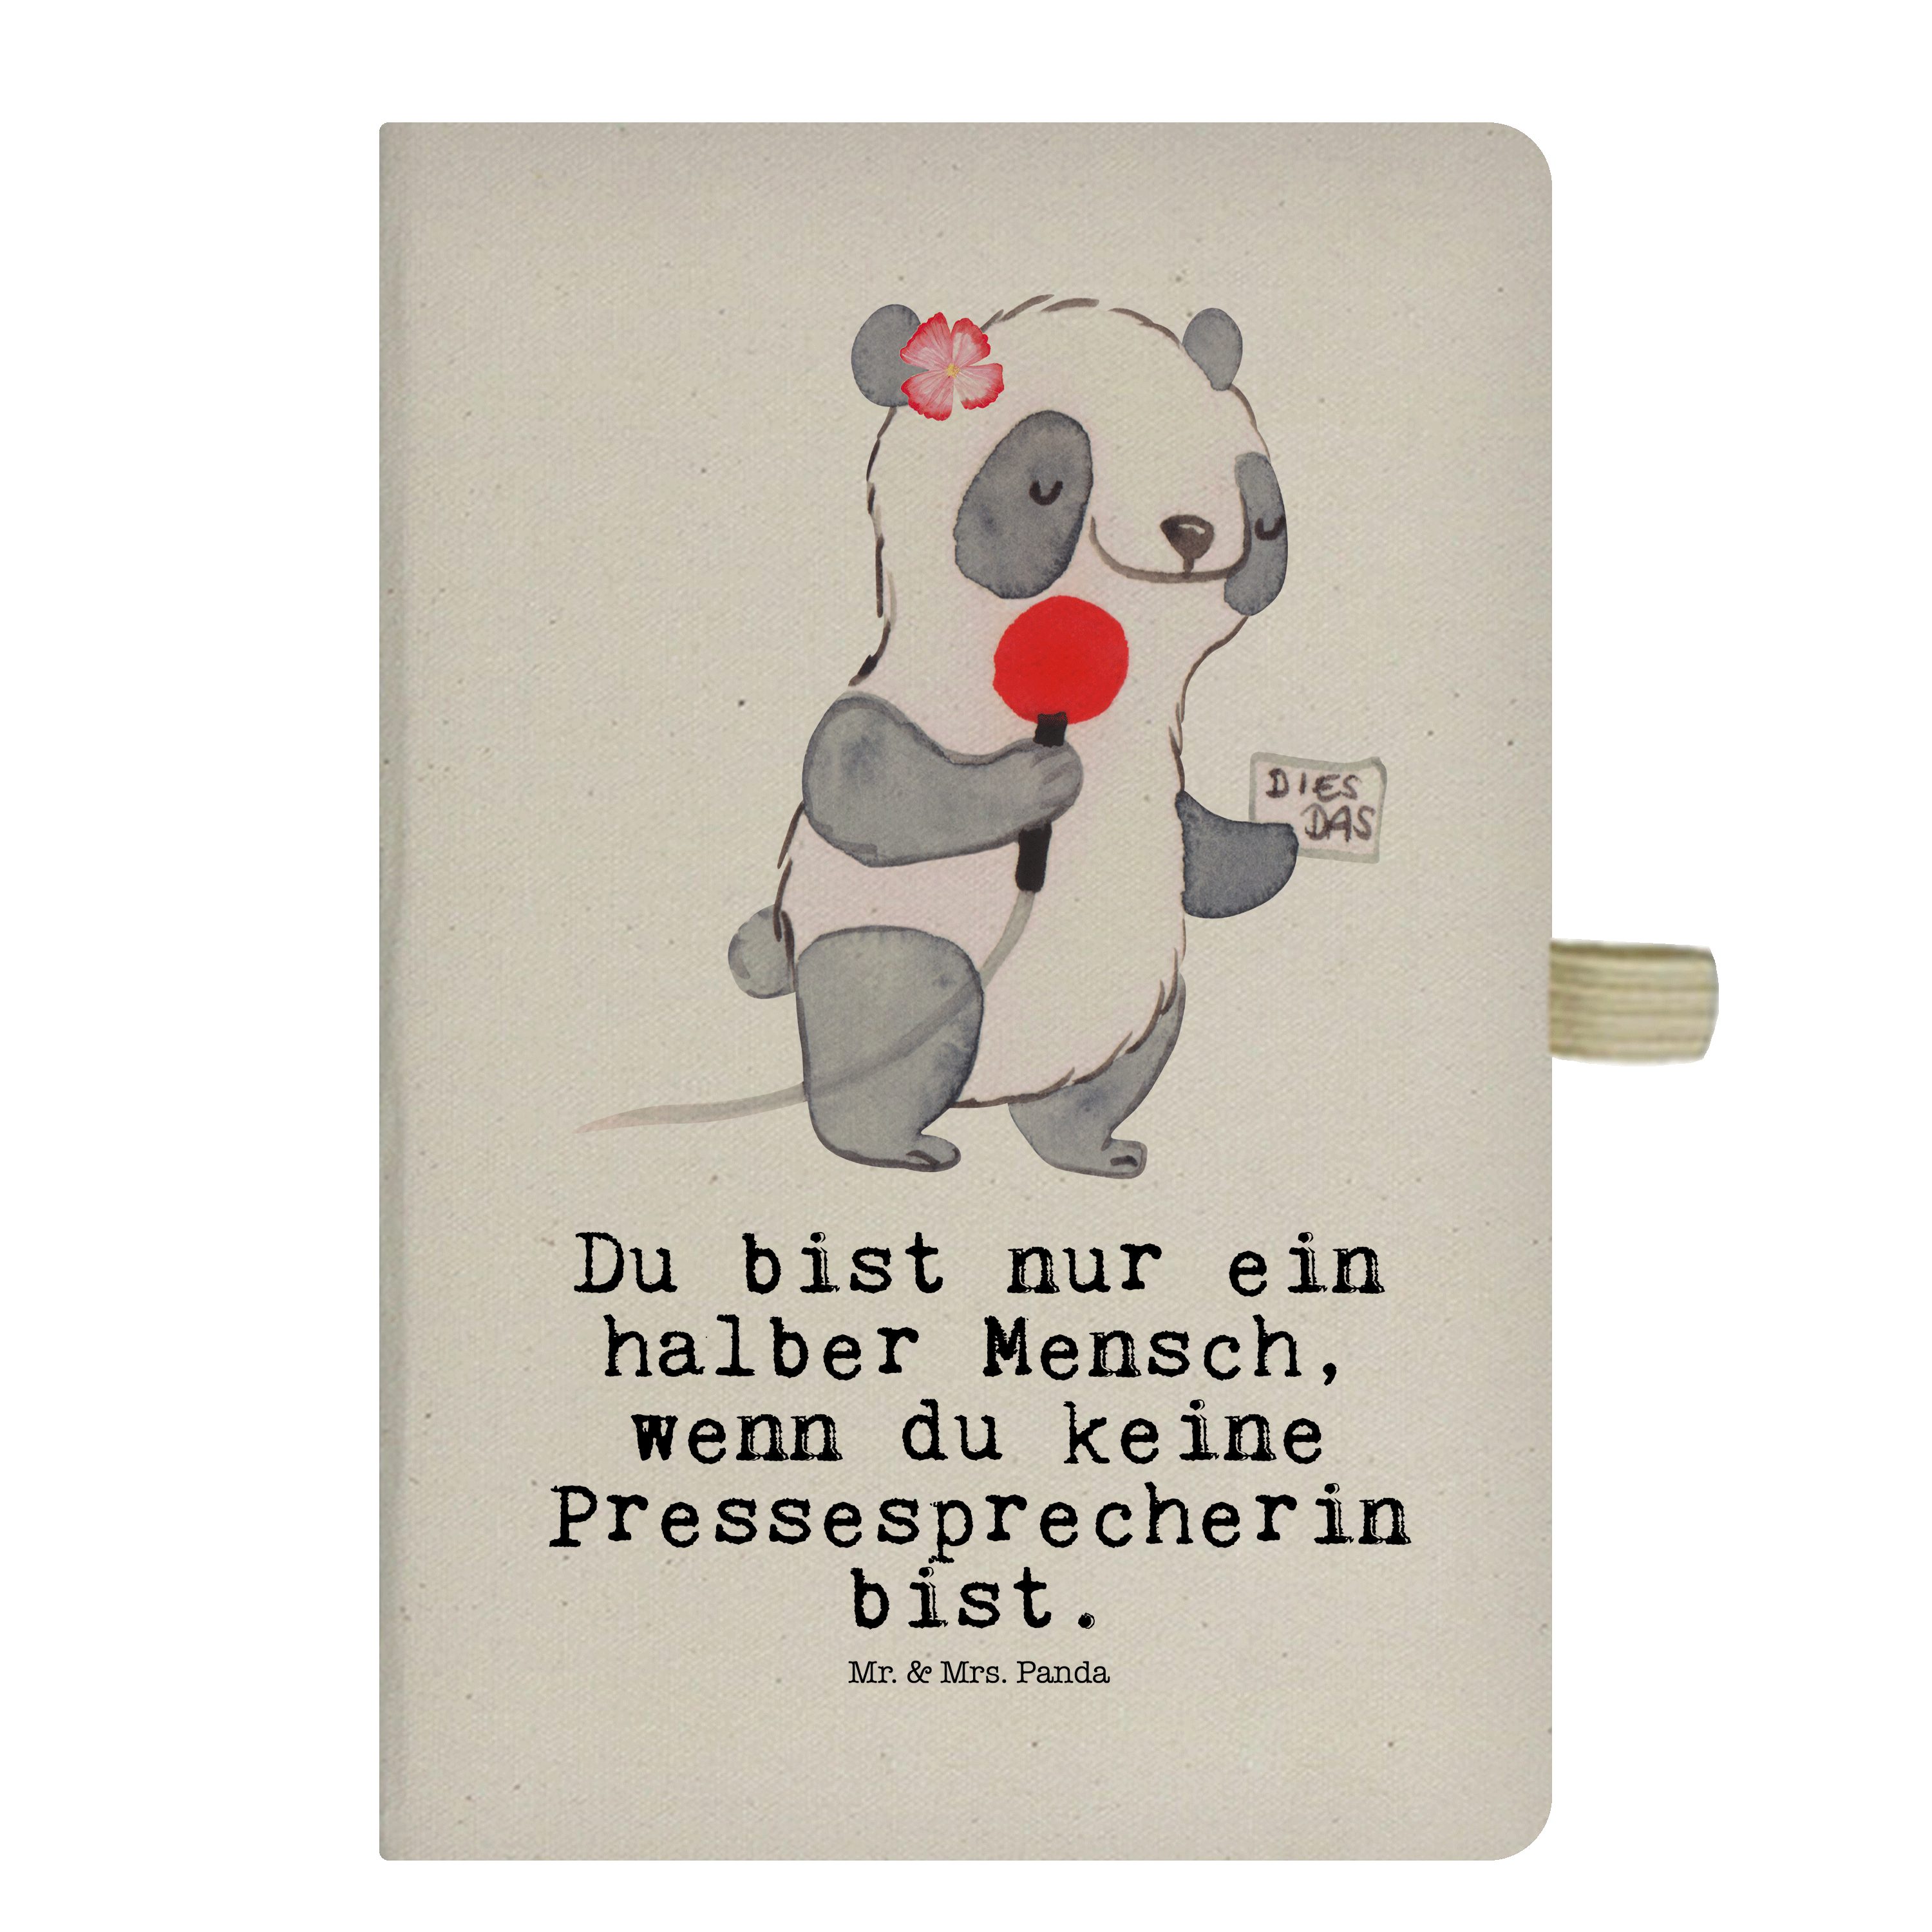 Mr. & Mrs. Panda Notizbuch Pressesprecherin mit Herz - Transparent - Geschenk, Notizen, Journal, Mr. & Mrs. Panda